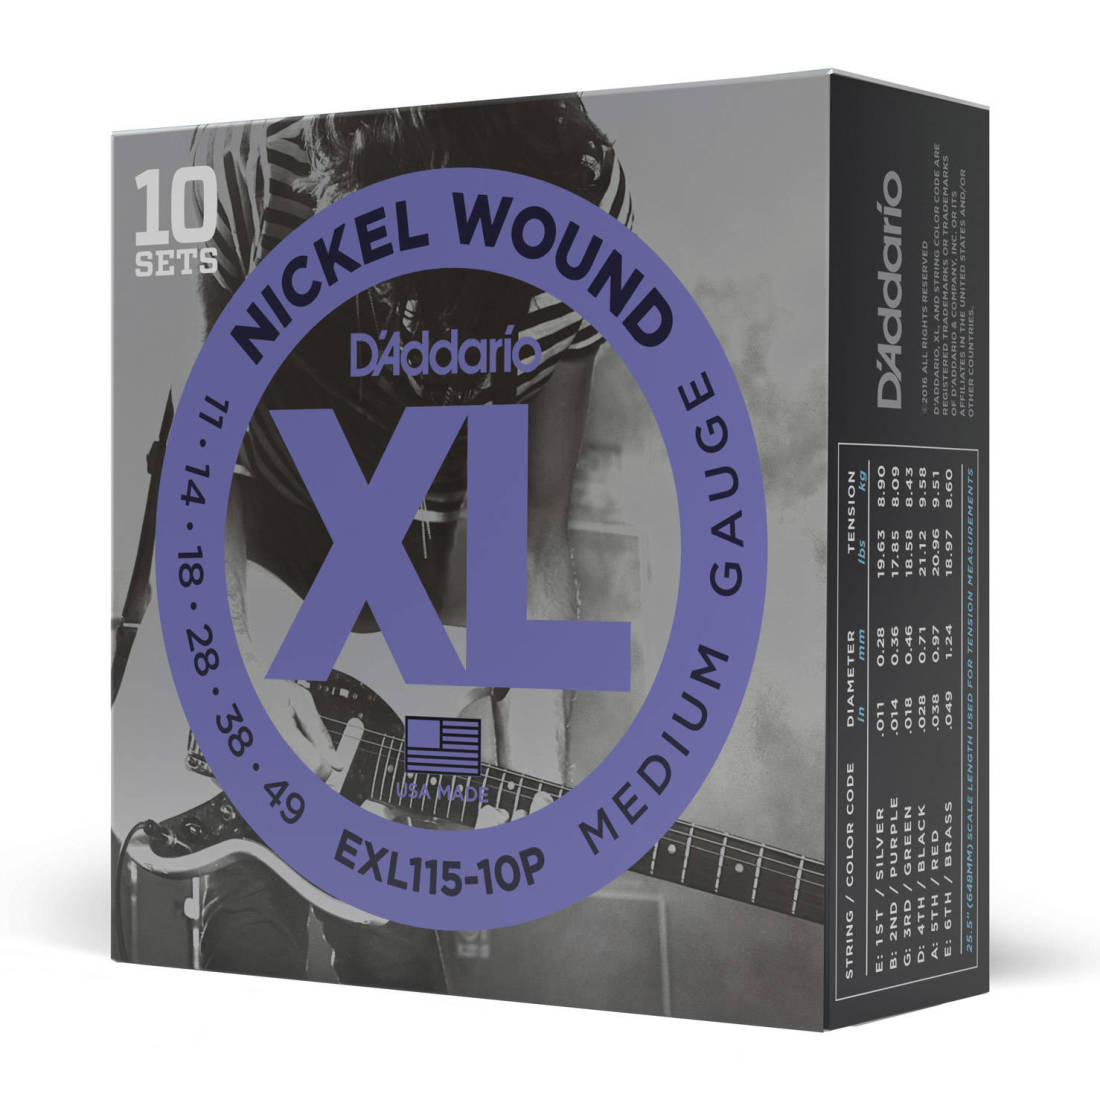 EXL115-10P Nickel Wound Electric Guitar String Sets 10-Pack - Jazz/Rock 11-49